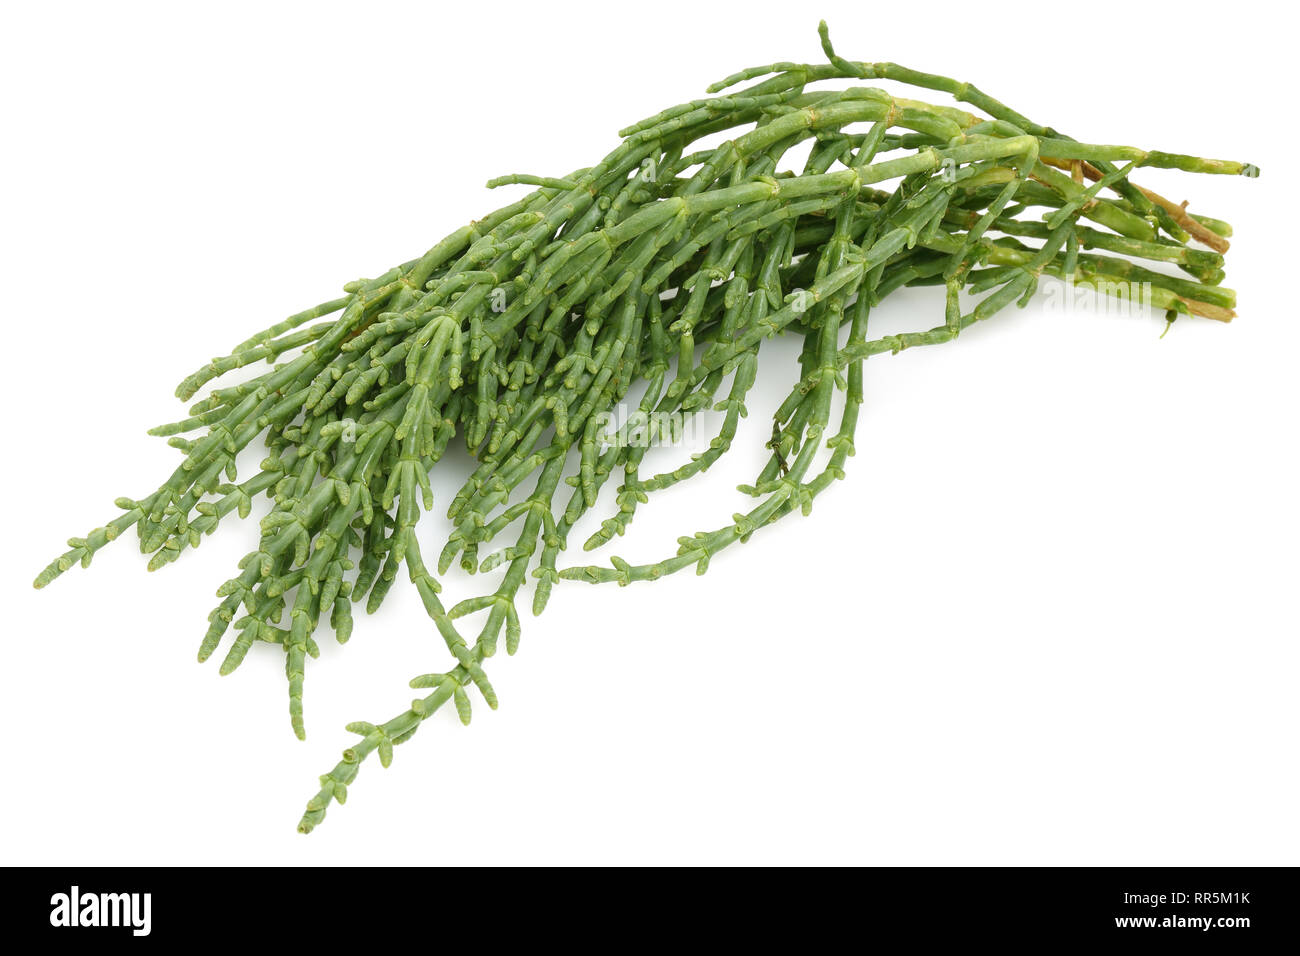 Green samphire or salicornia plants isolated on white background Stock Photo